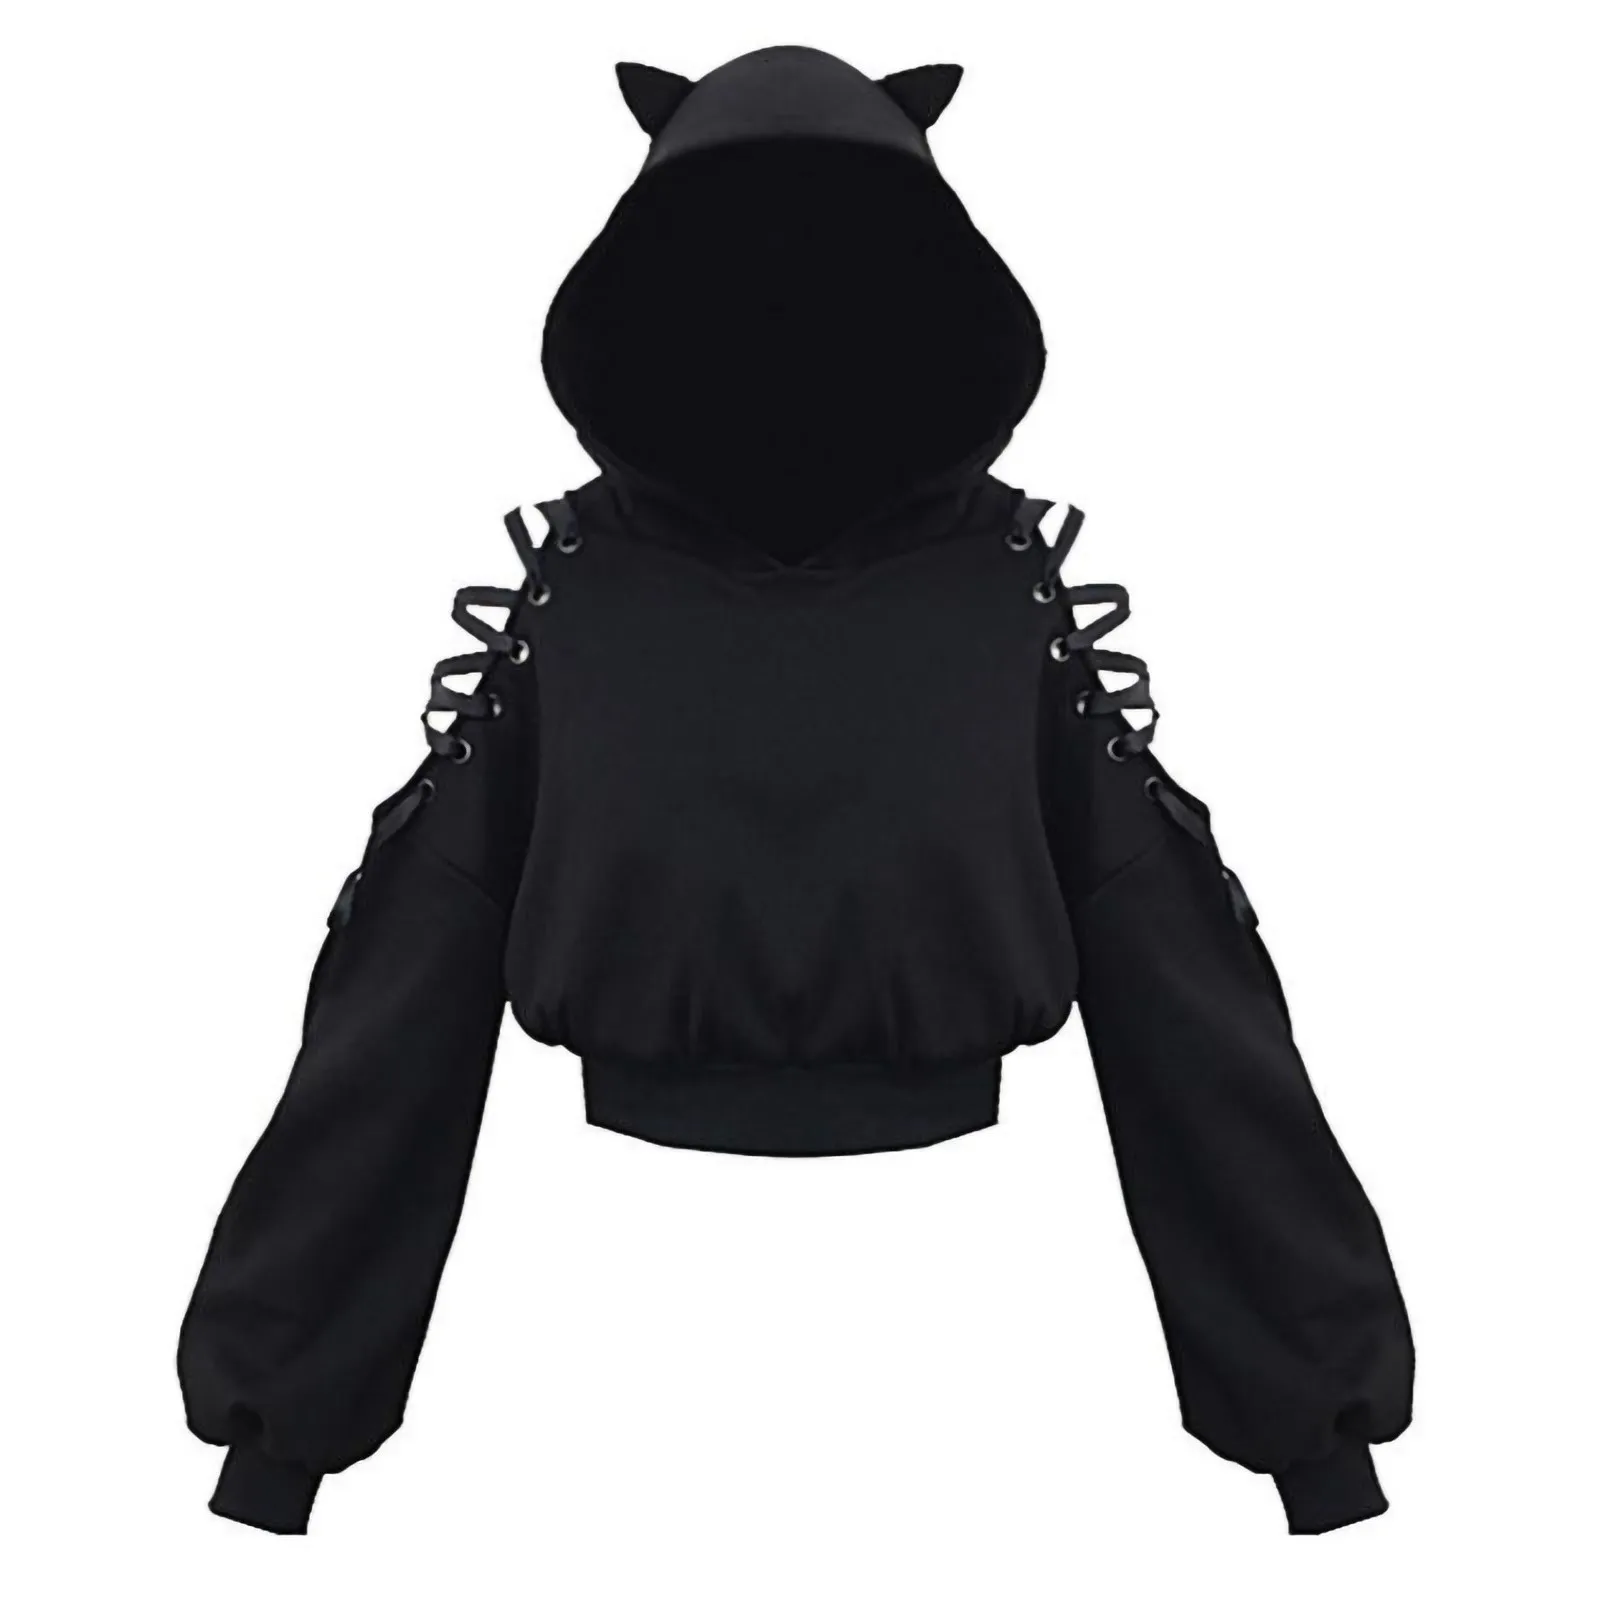 ženske Mačje Uho Hoodie Pulover z Dolgimi Rokavi Križ Hooded Majica Srčkan Solid Black Gothic Sweatshirtsstreetwear Sudaderas#h5